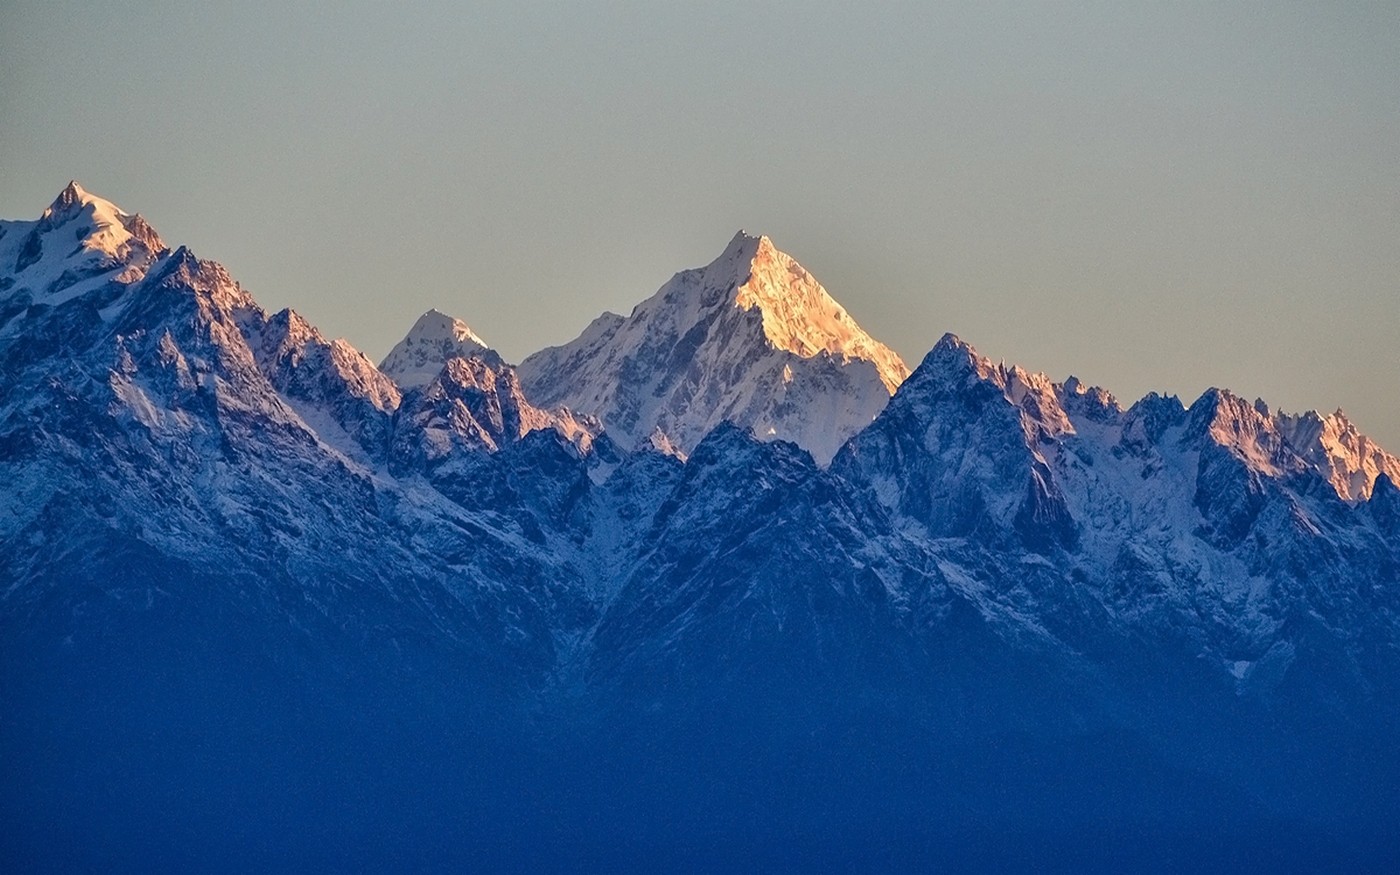 General 1400x875 landscape nature mountains snowy peak summit sunlight Himalayas India snowy mountain